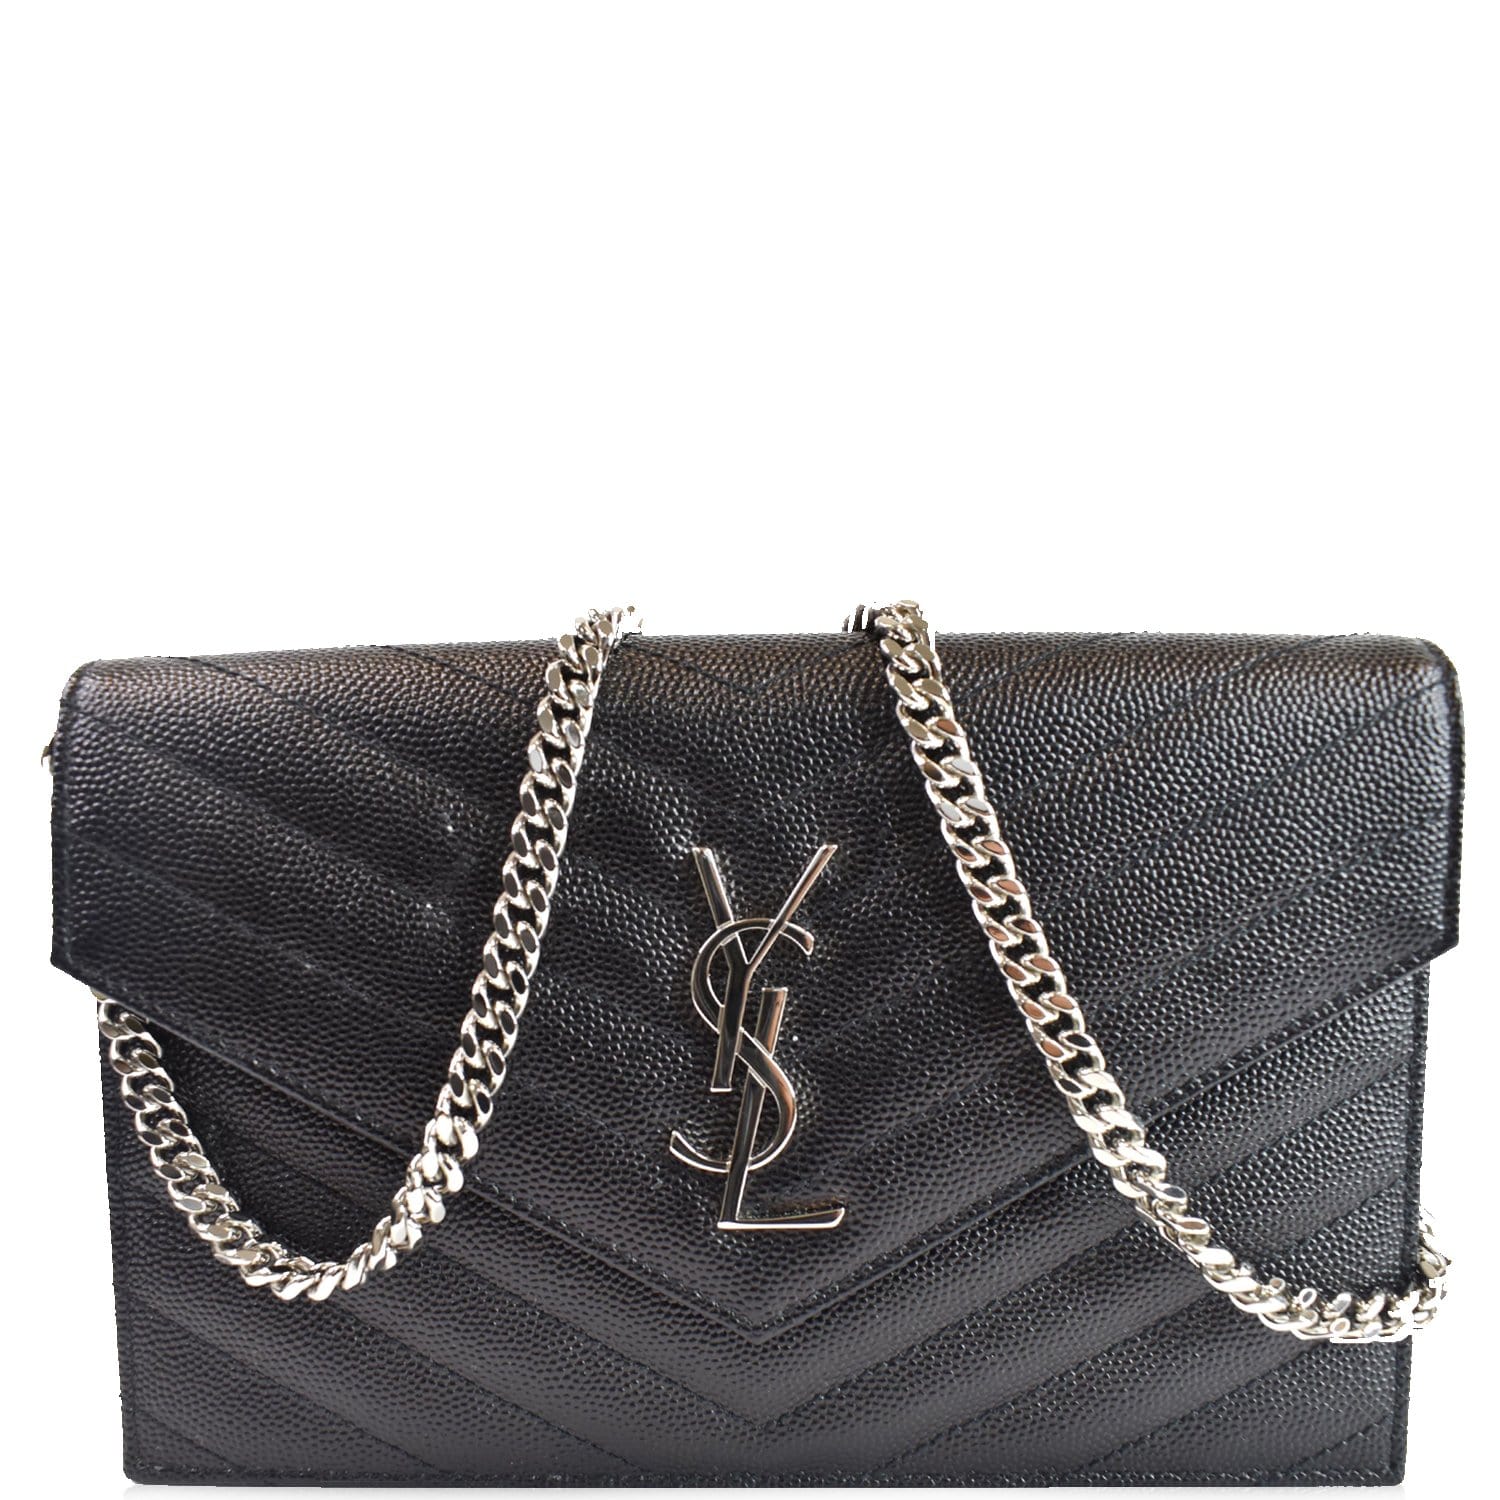 YSL Saint Laurent Wallet on a Chain WOC Crossbody Bag Black Silver